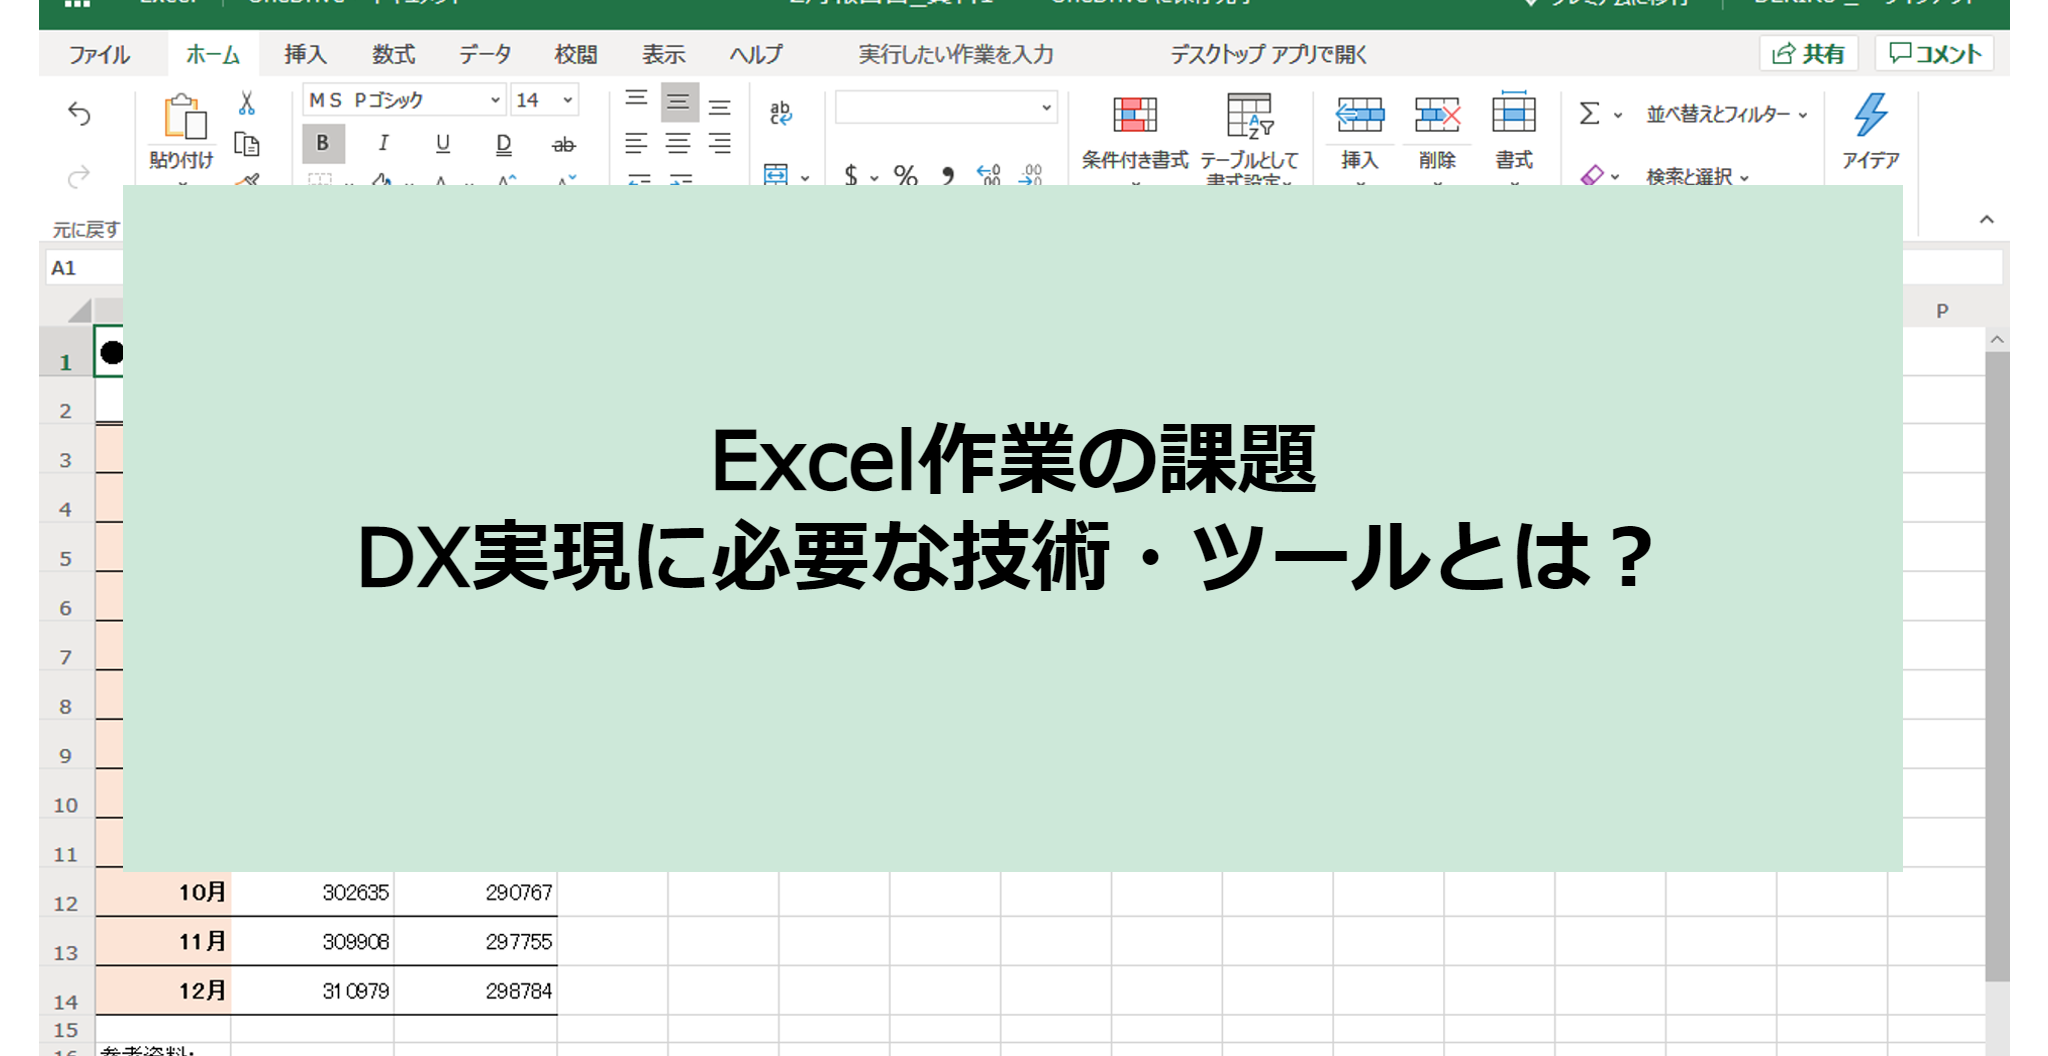 Excel作業の課題。DX実現に必要な技術・ツールとは？ | 業務効率化